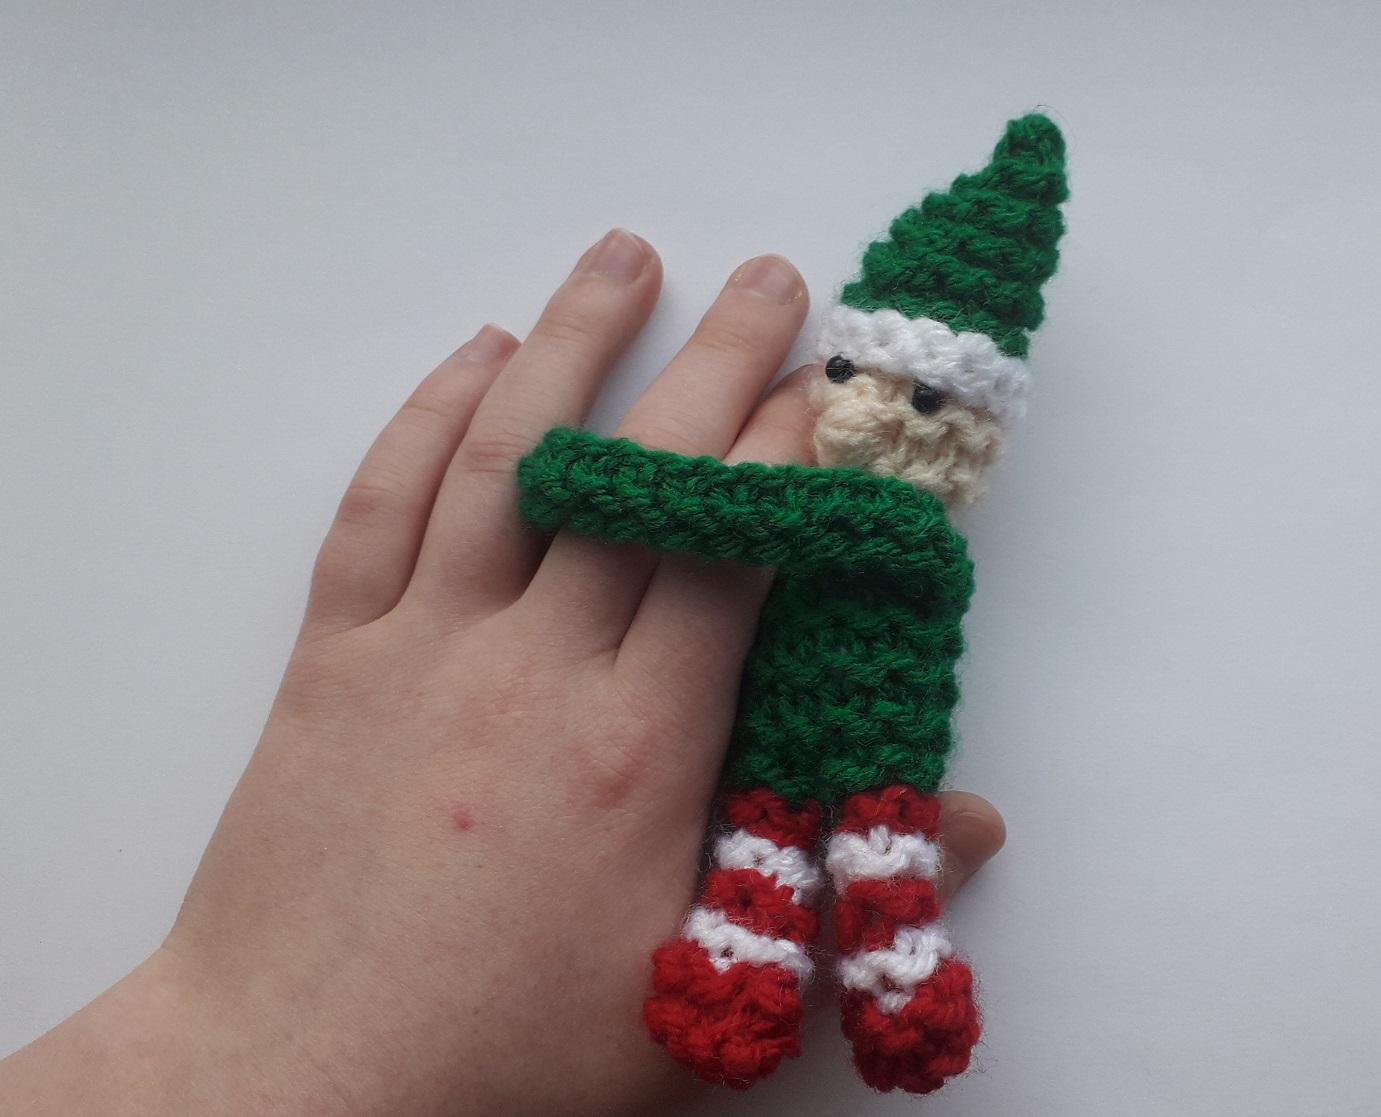 Snuggle elf hugging fingers